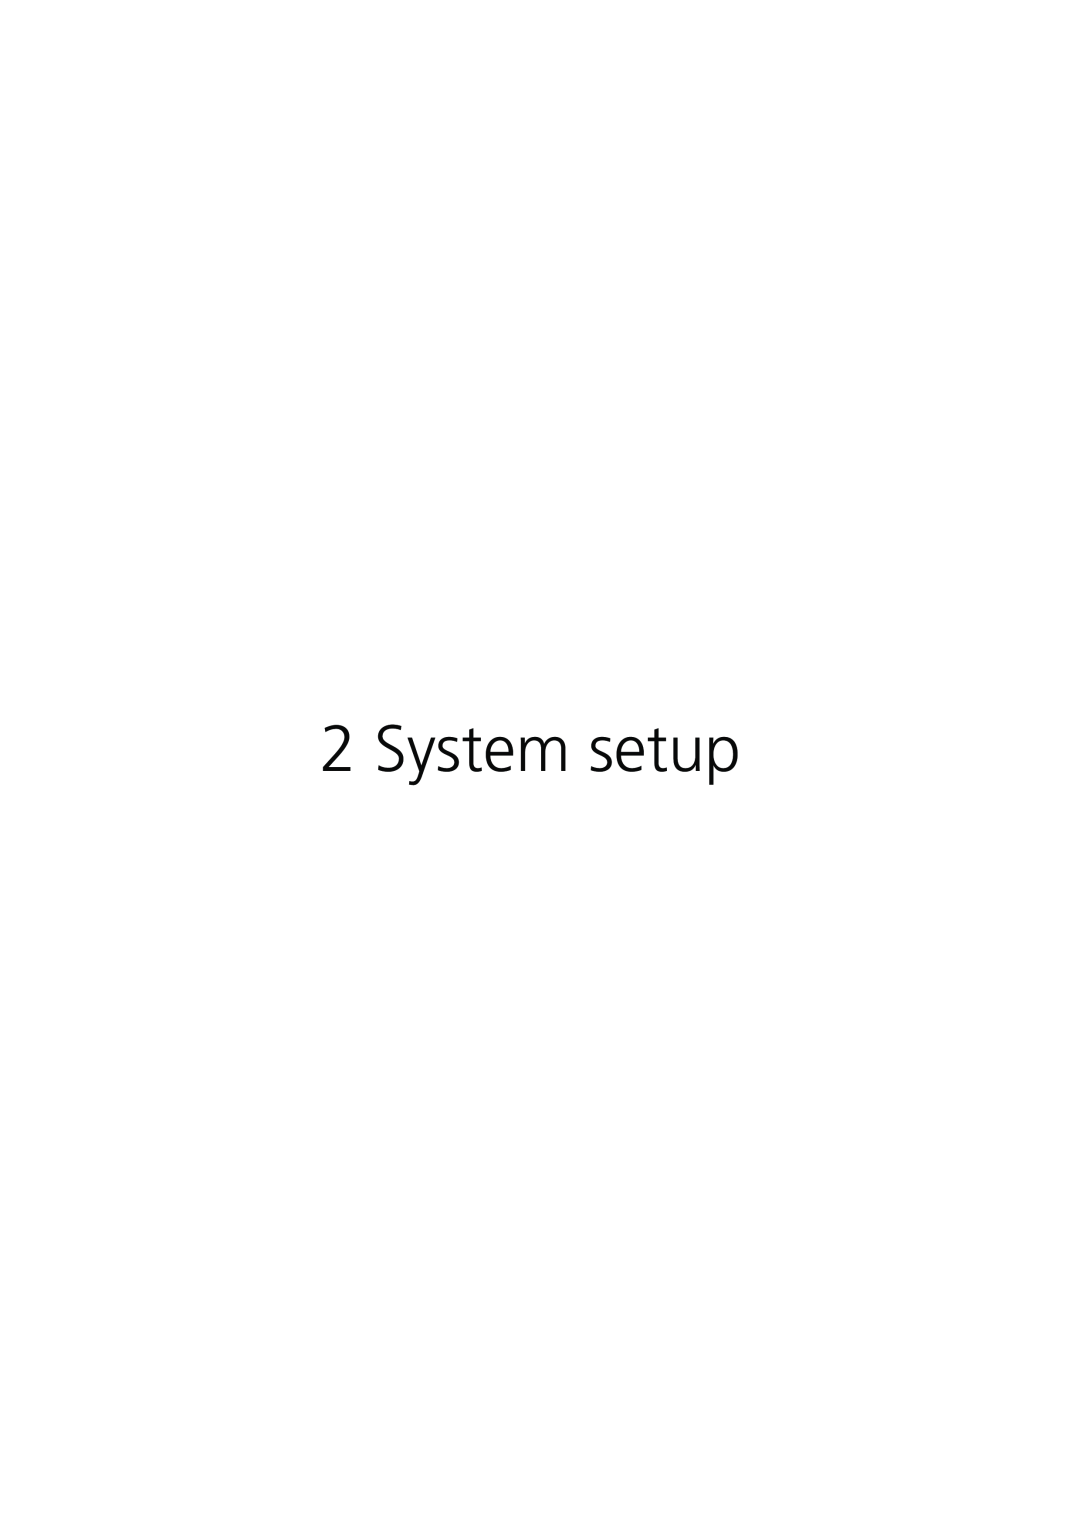 Acer R720 Series manual System setup 